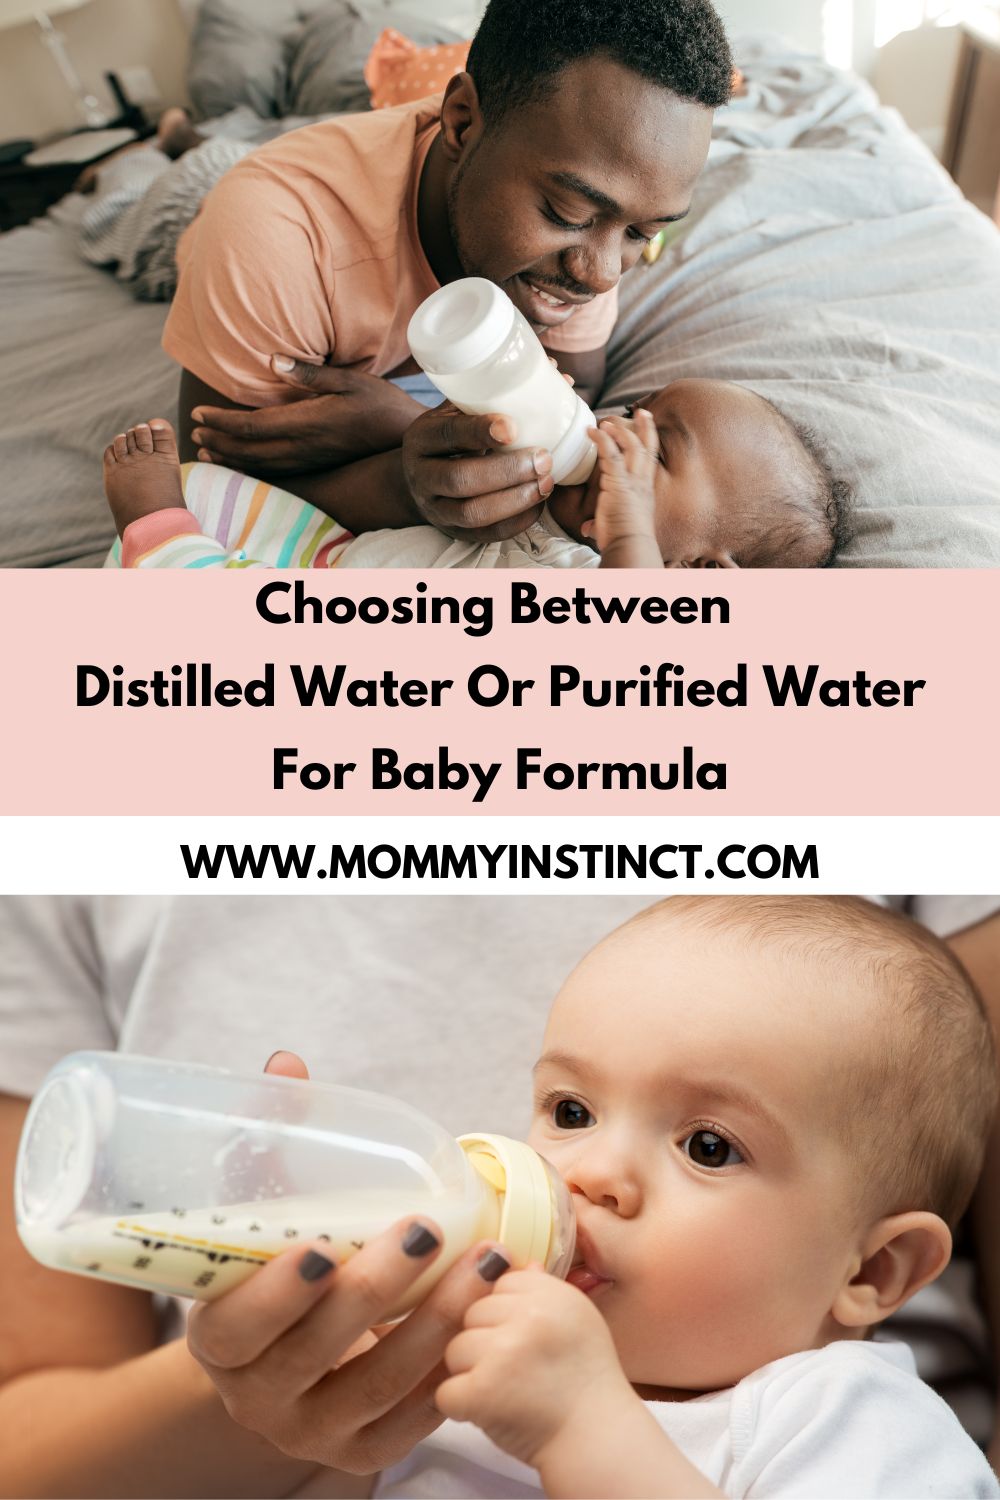 Choosing between distilled water or purified water for baby formula